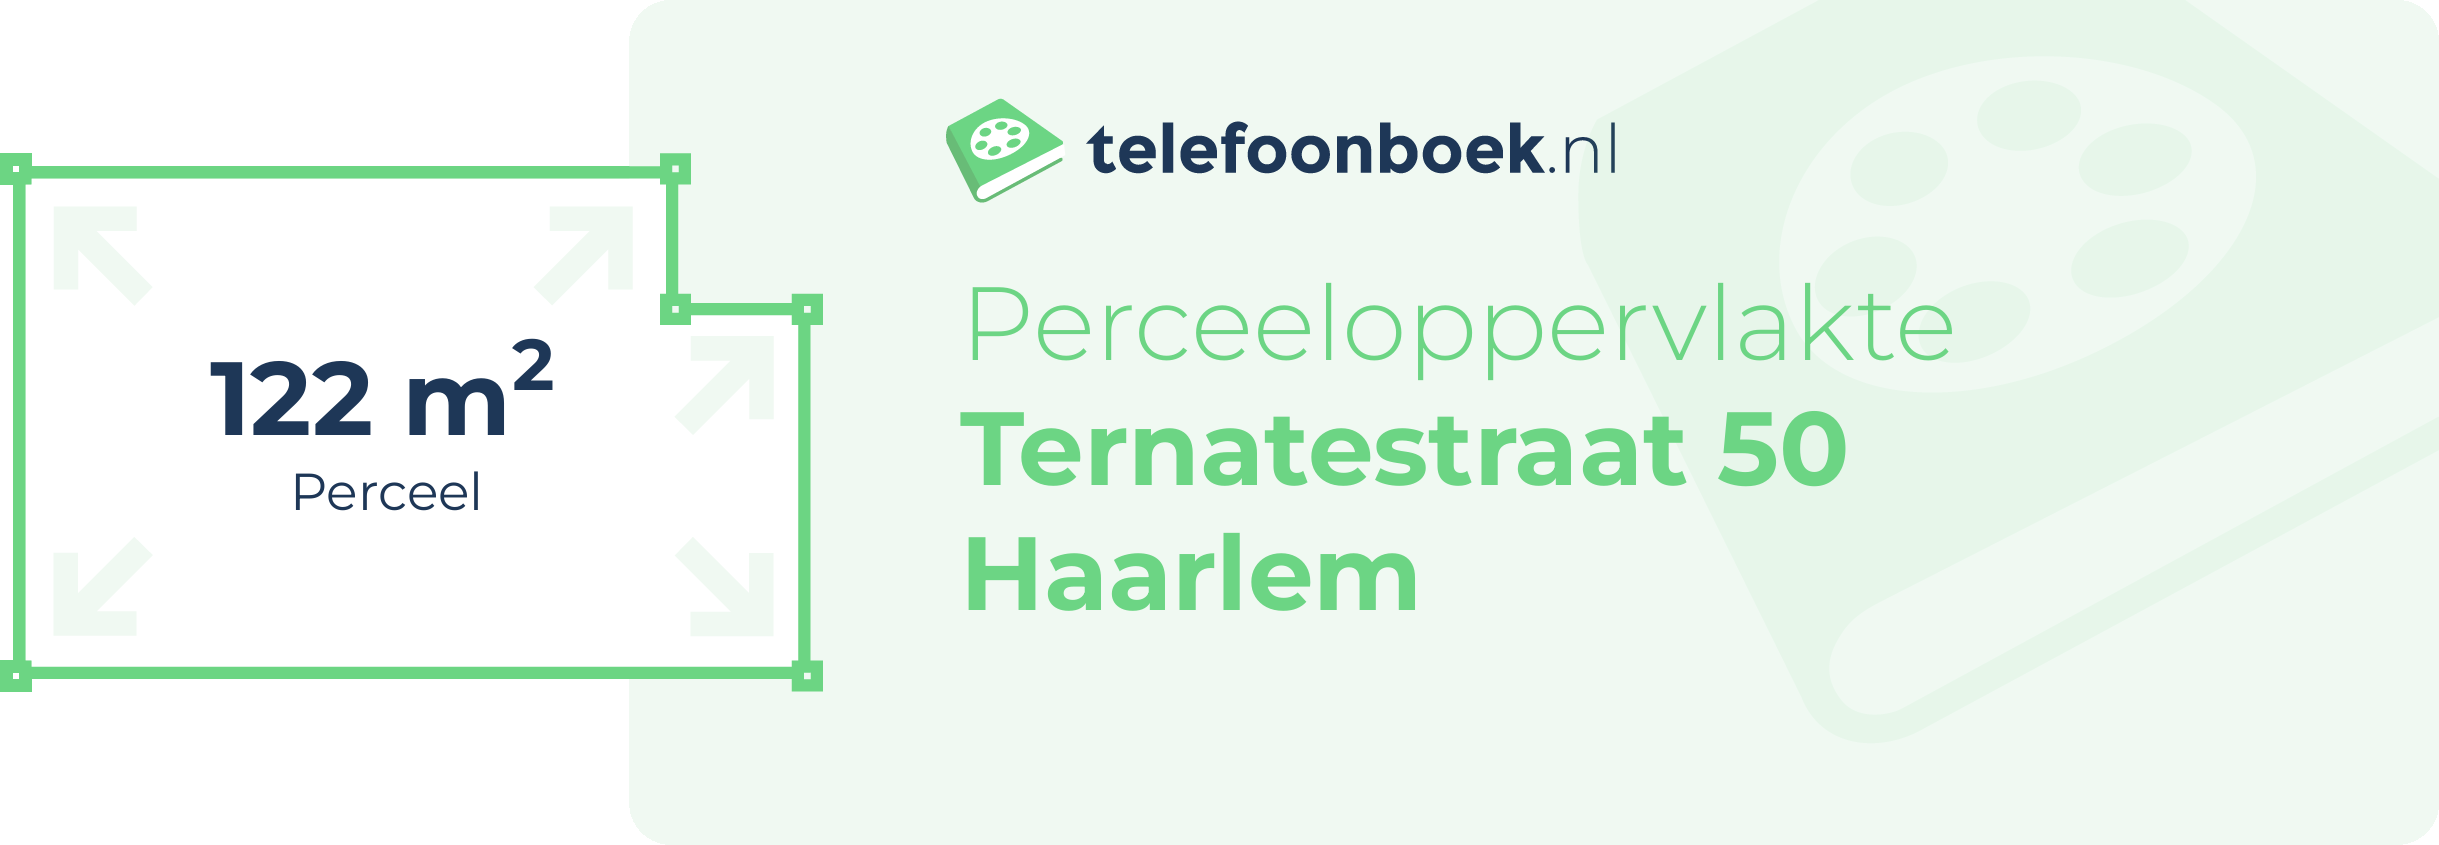 Perceeloppervlakte Ternatestraat 50 Haarlem